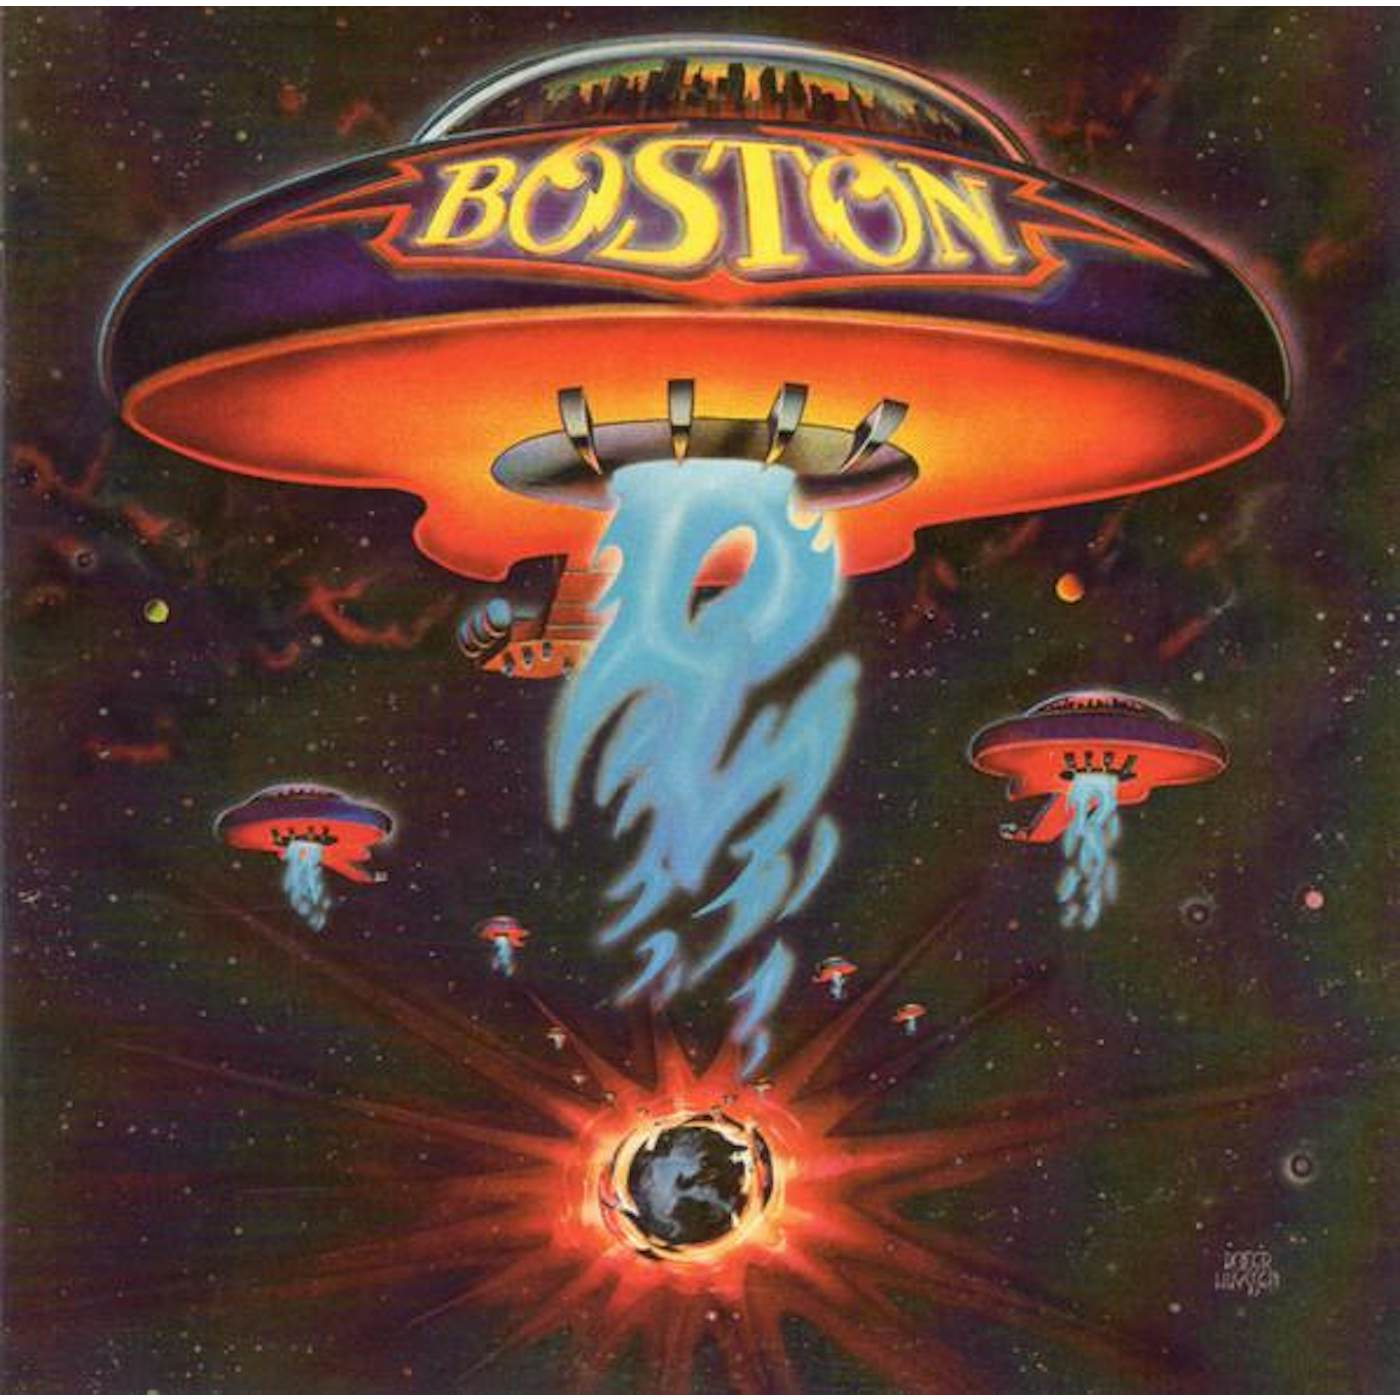 BOSTON CD